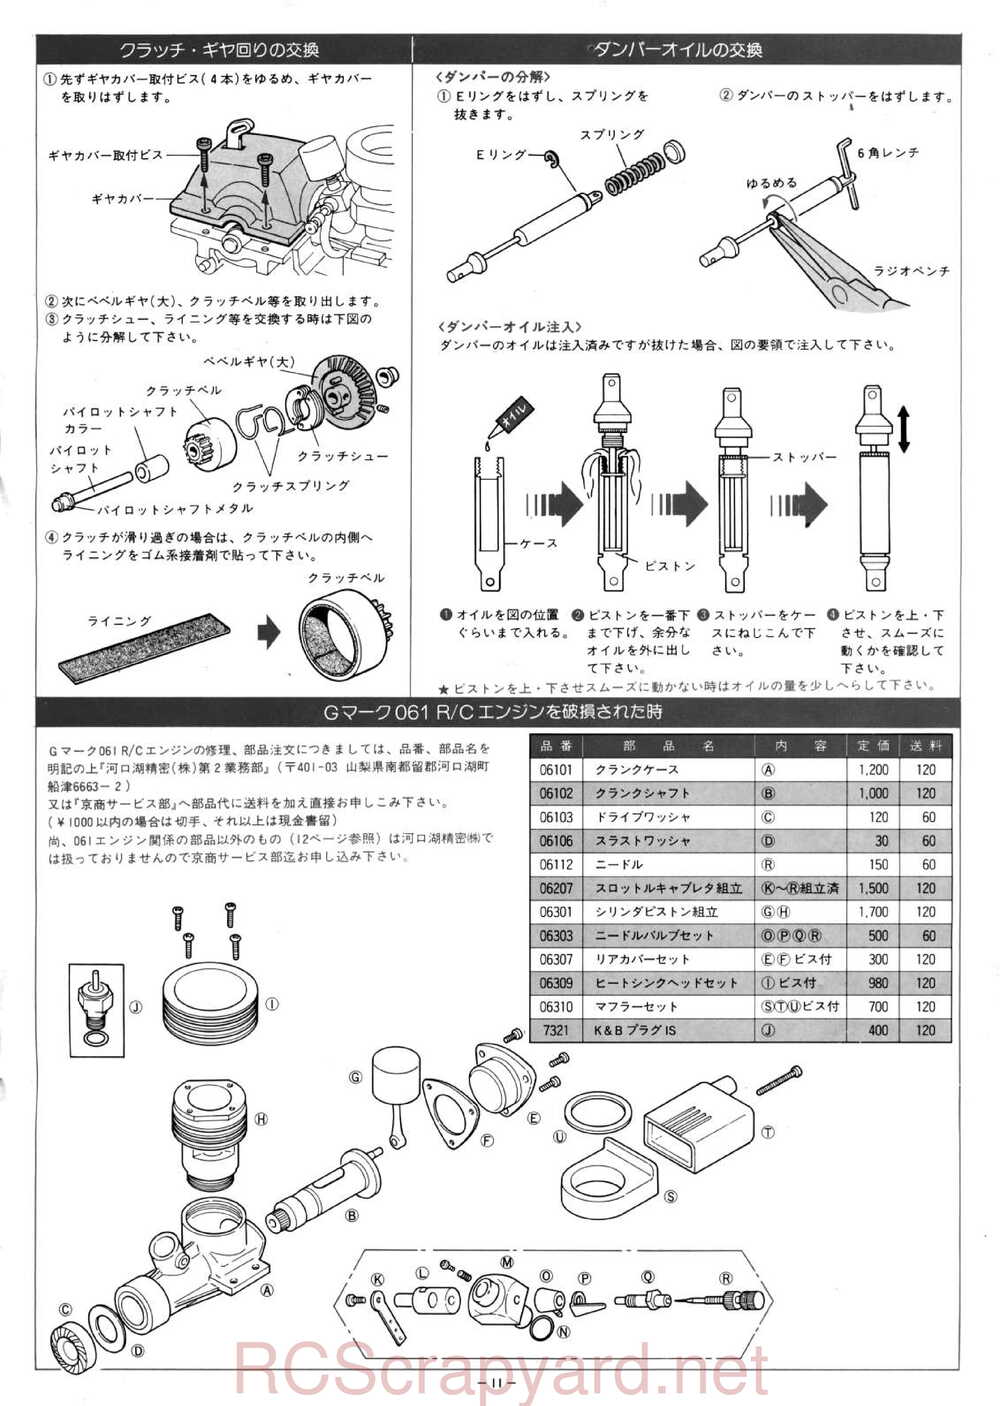 Kyosho - 3085 - Minitz-06 - Datsun-Stepside - Manual - Page 11